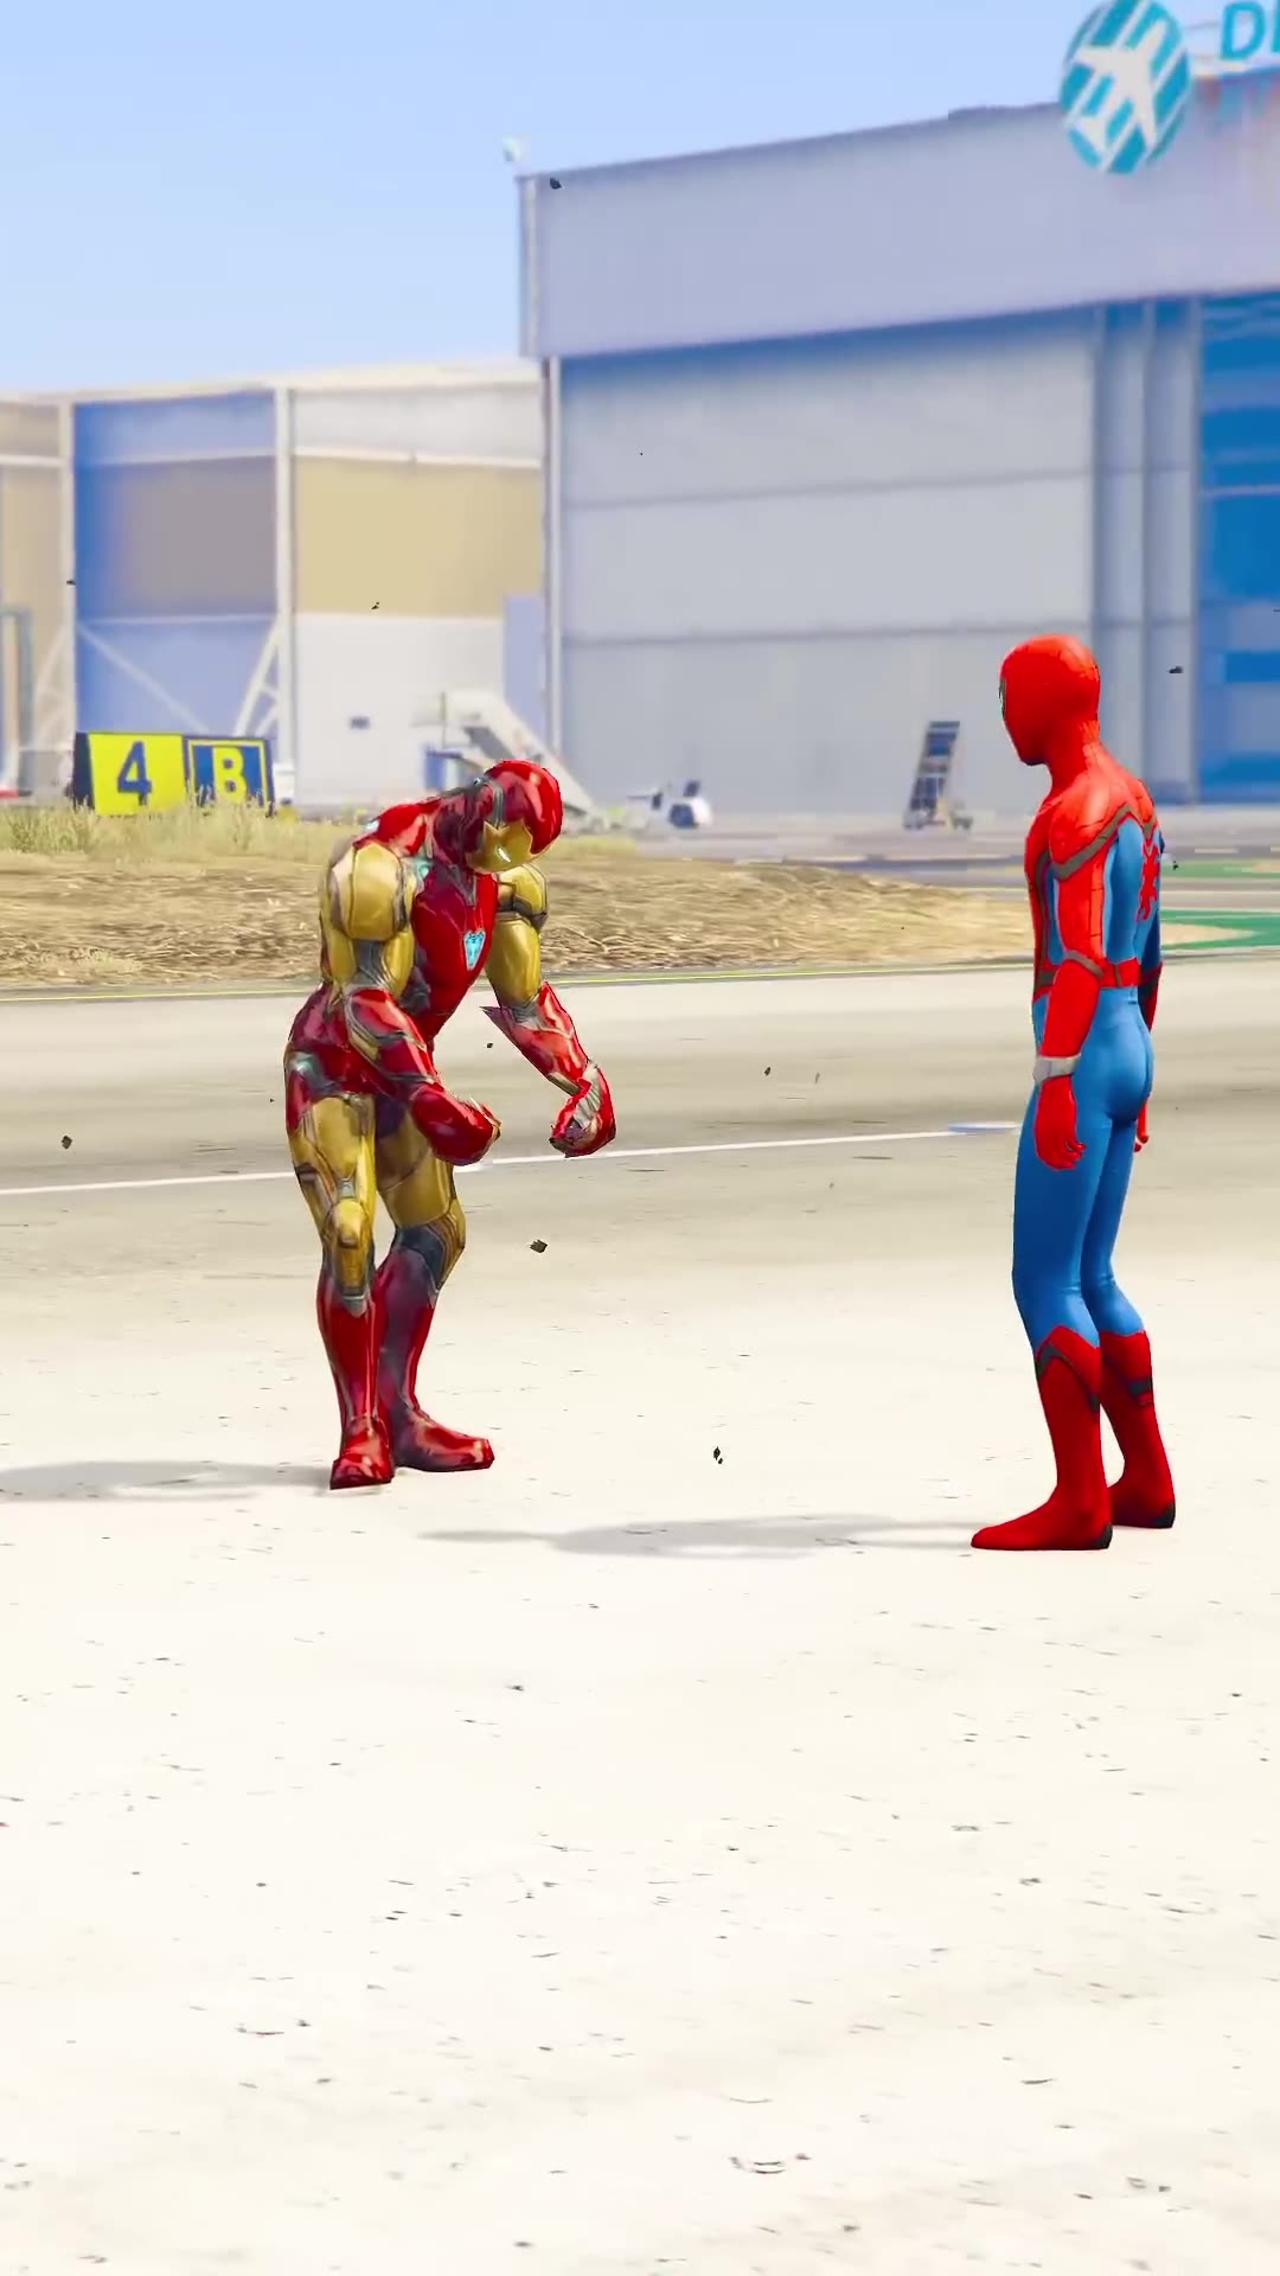 Gta 5 : Iron man vs Spiderman Super Punch challenge